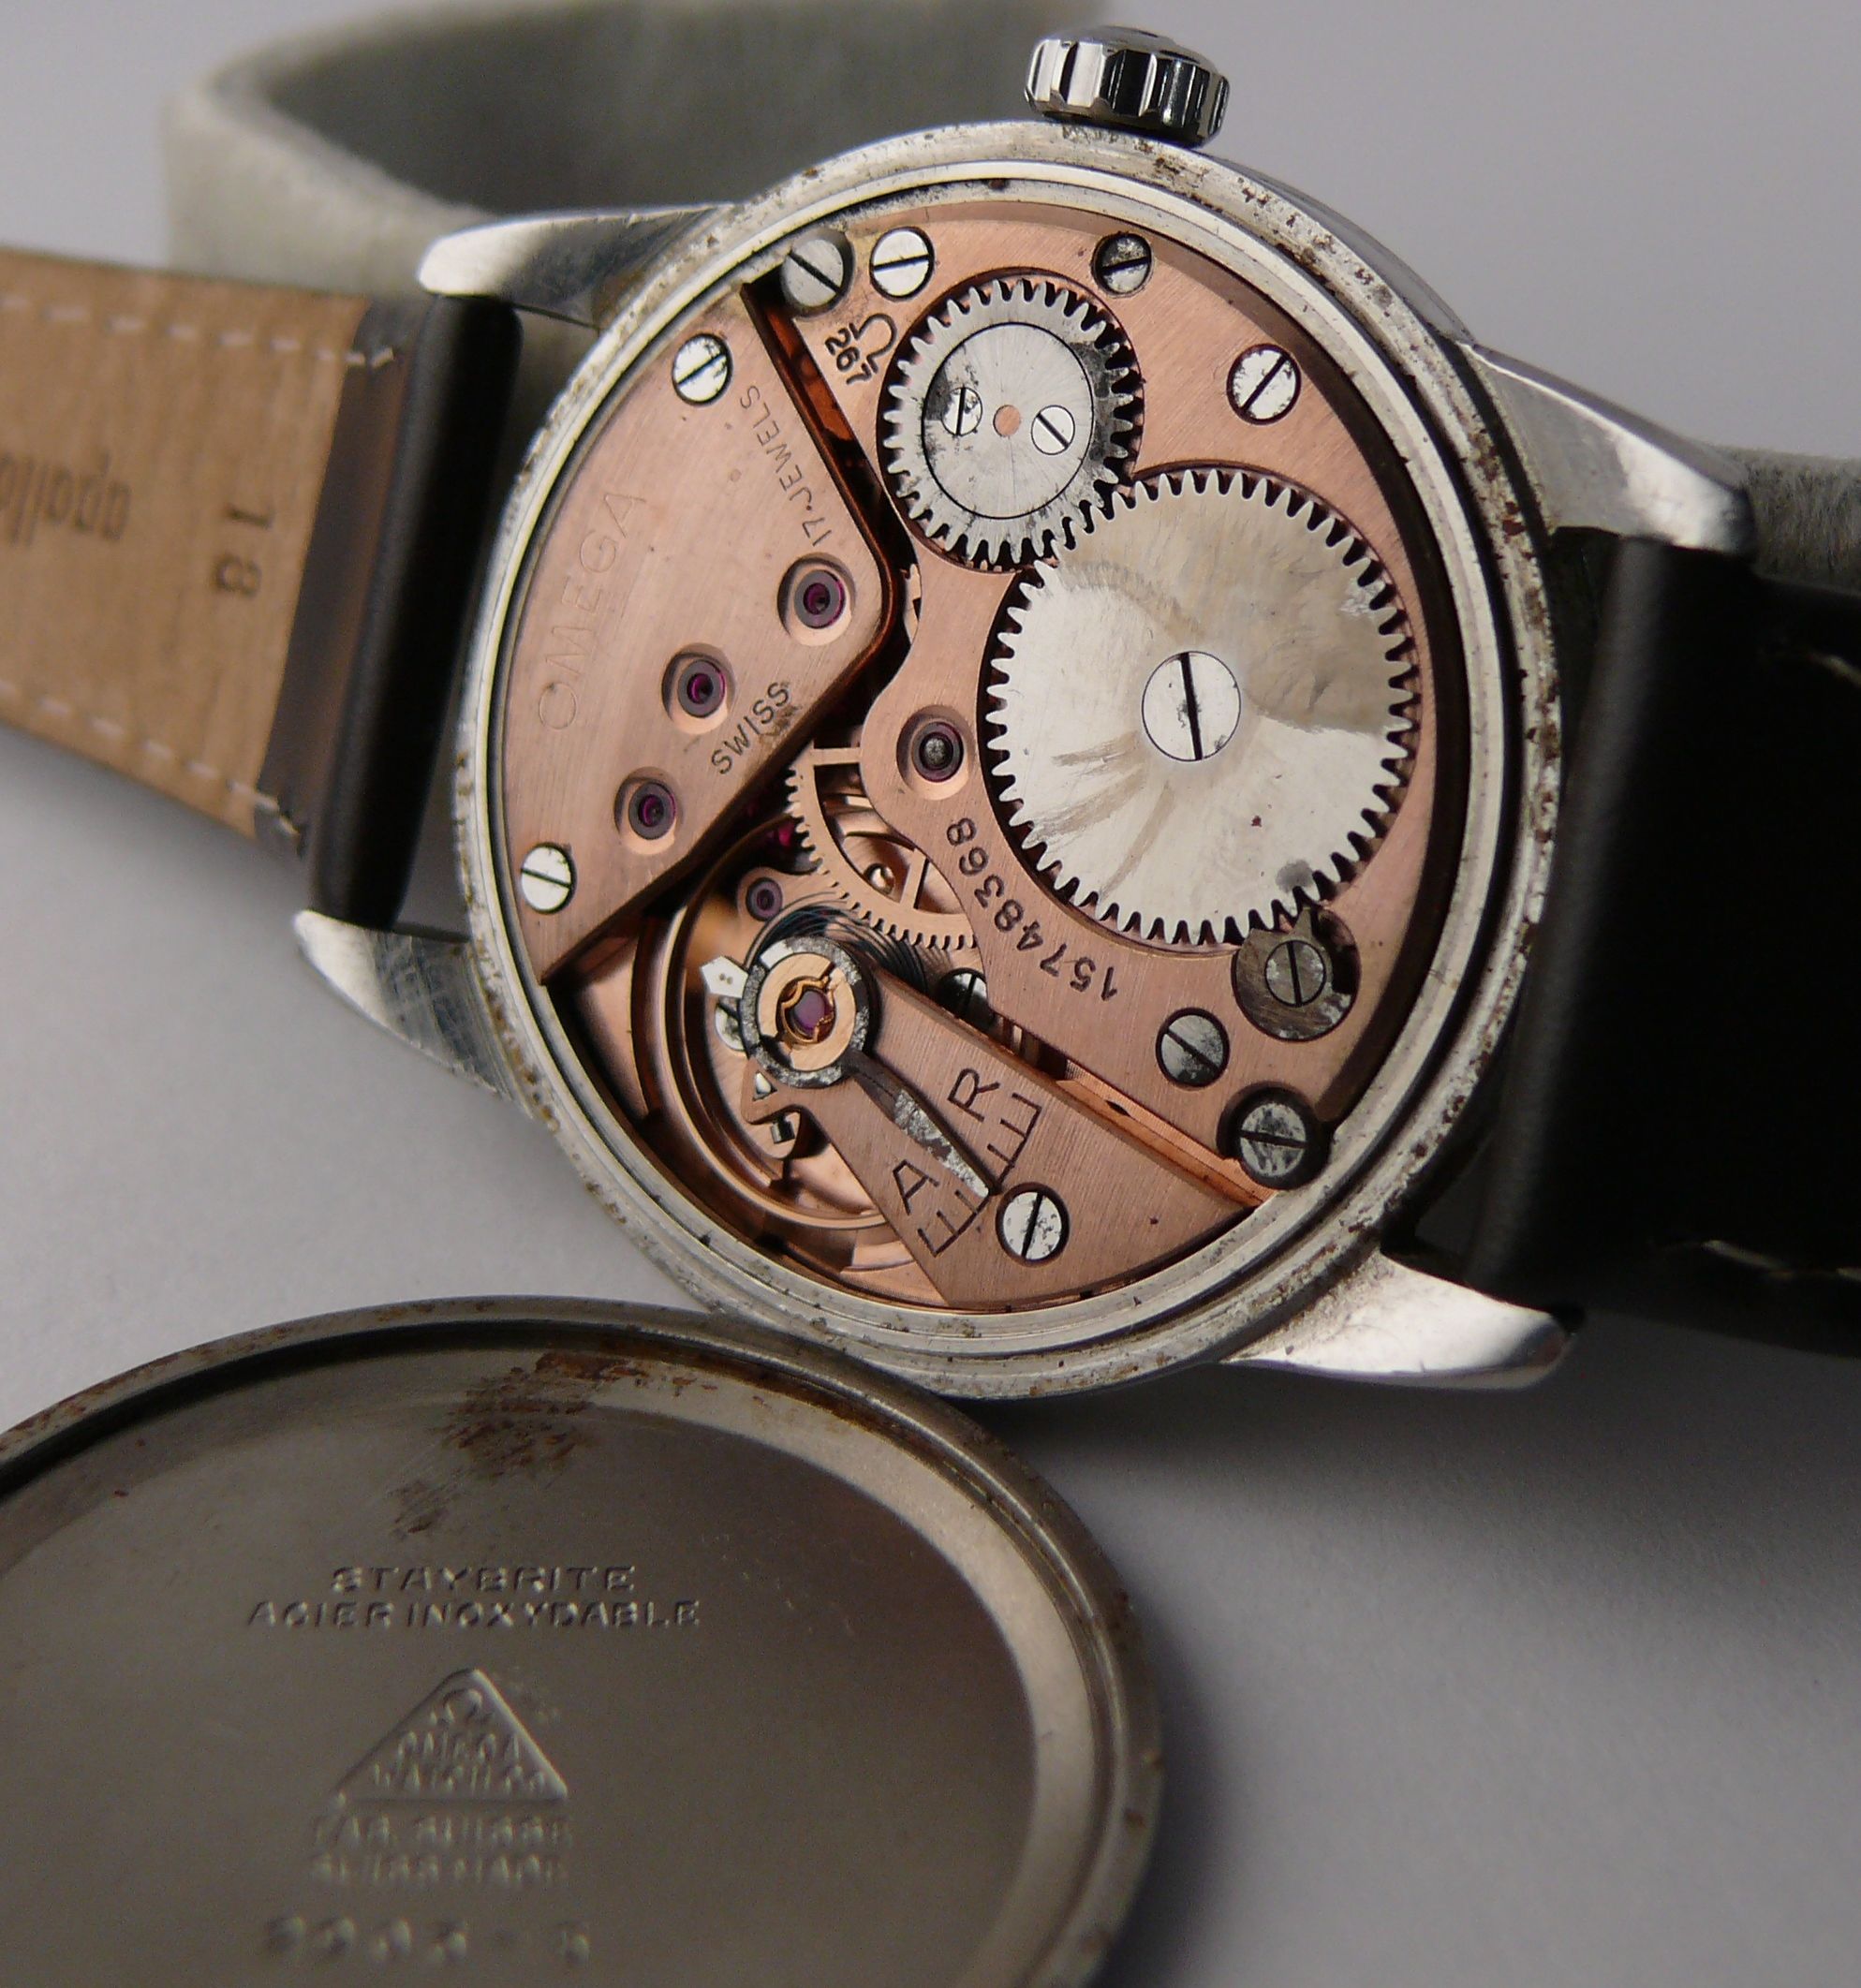 1959 Vintage Gents Omega Geneva Manual Wind Wristwatch Ref 2903. Original dial shows even patina - Image 6 of 7